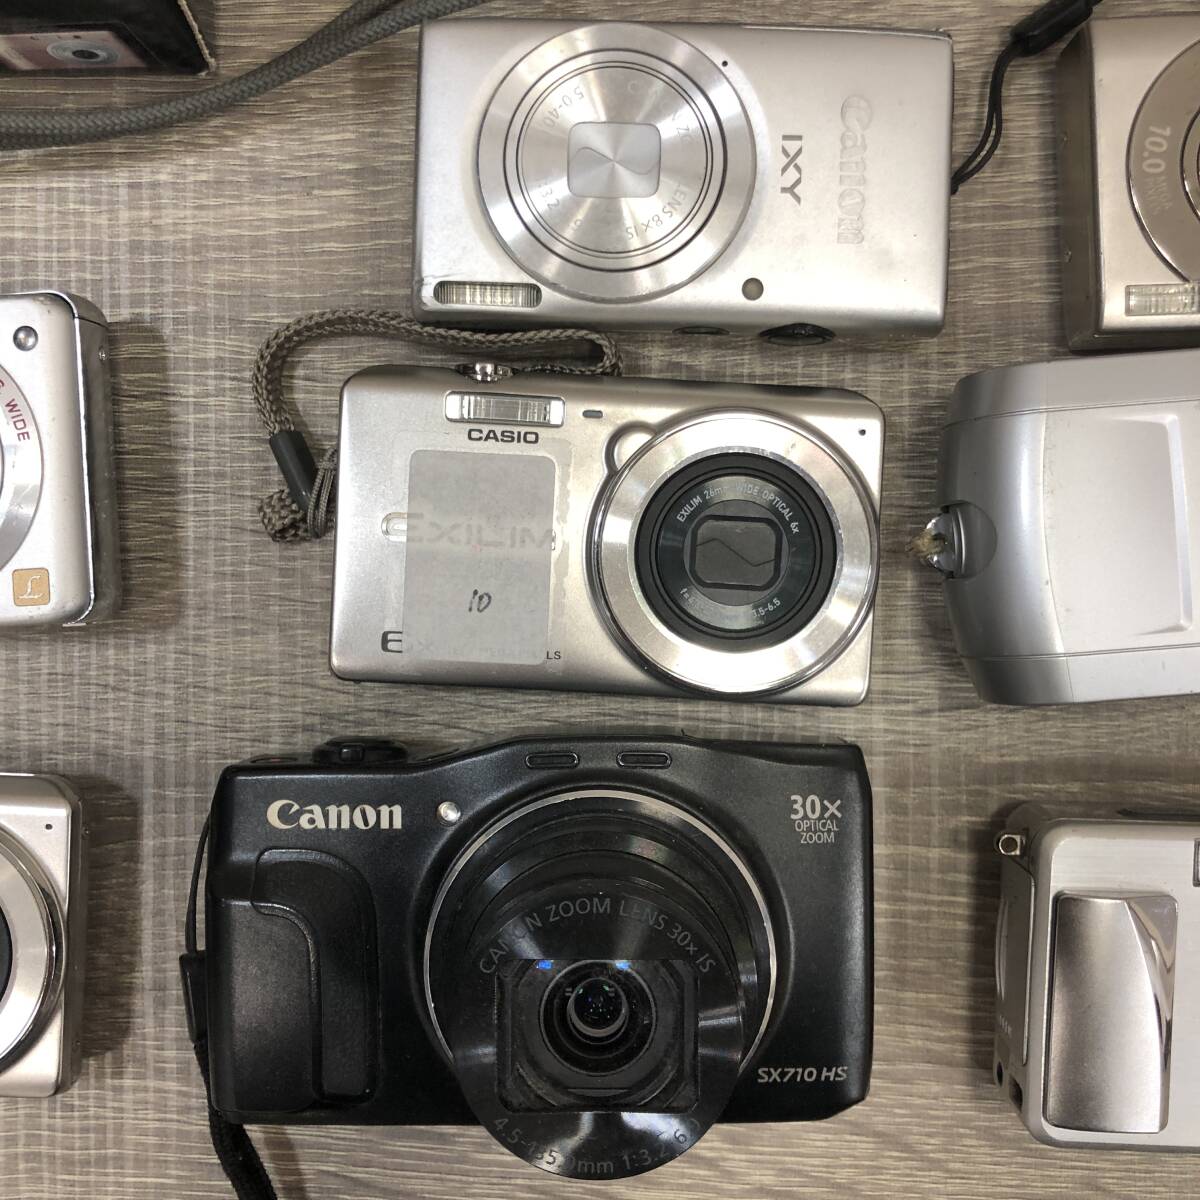  Junk digital camera summarize 13 piece / compact digital camera / Canon / LUMIX / Ricoh / Casio / Nikon 